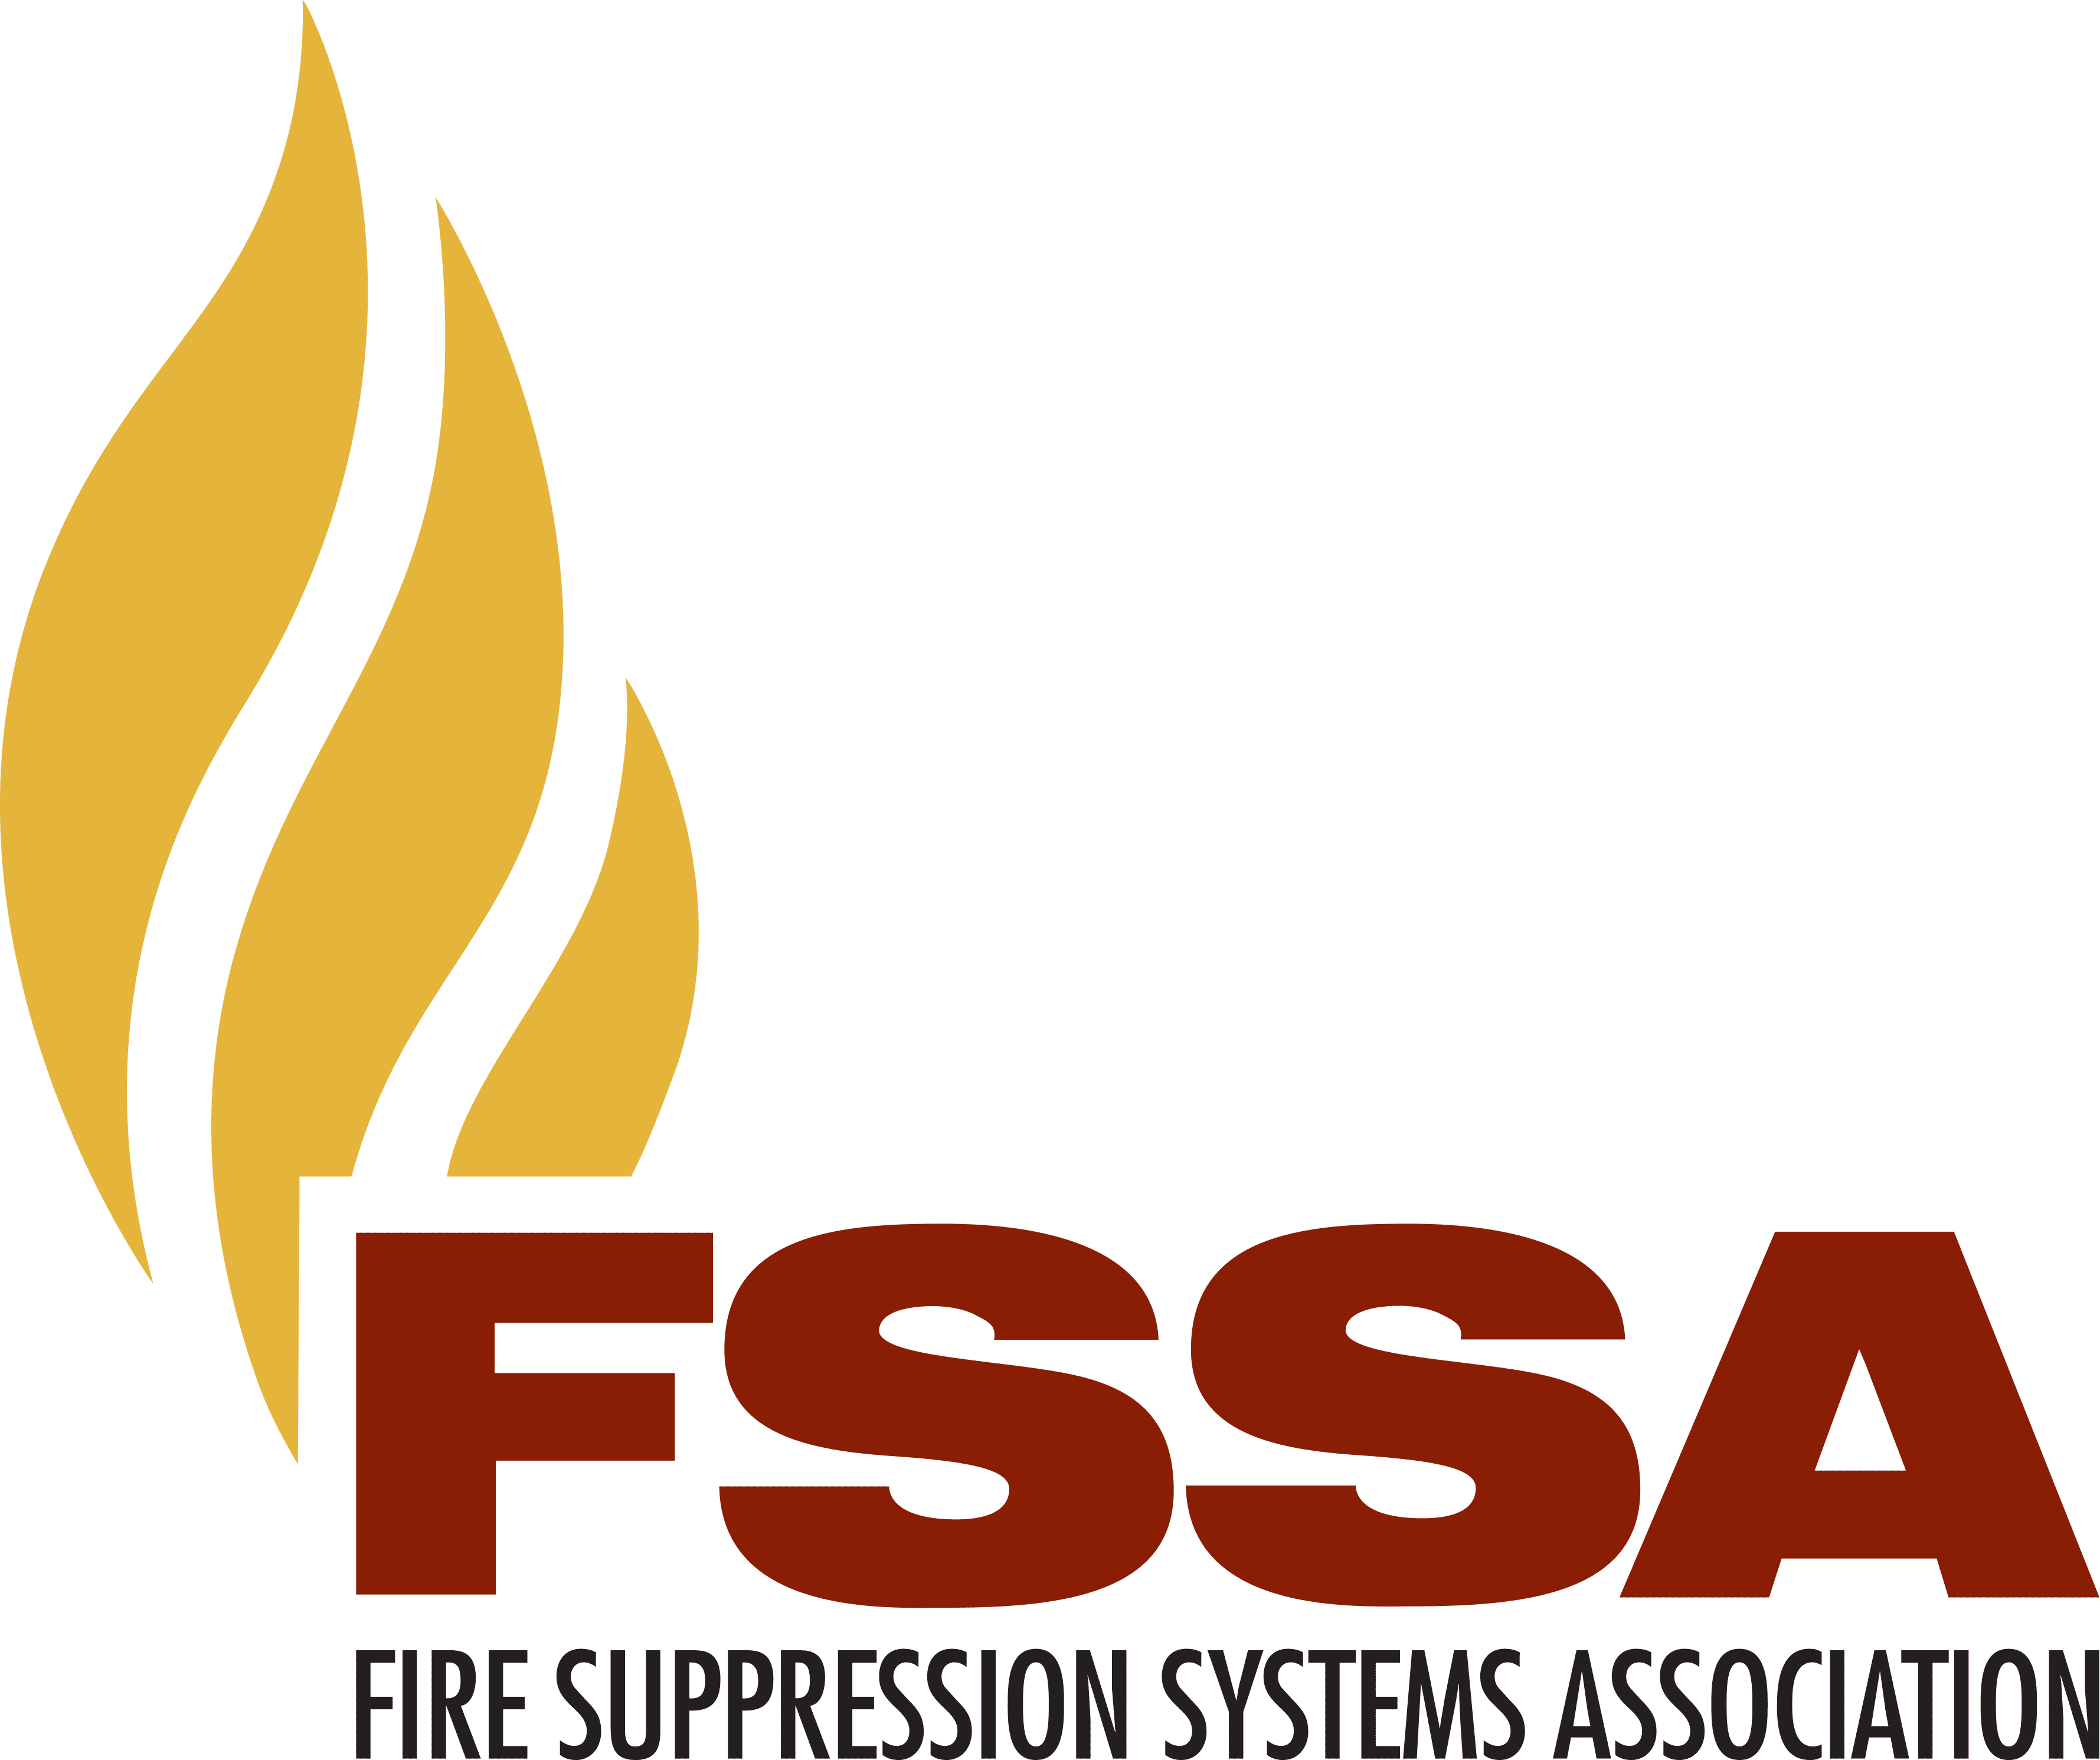 A fire suppression systems association logo.